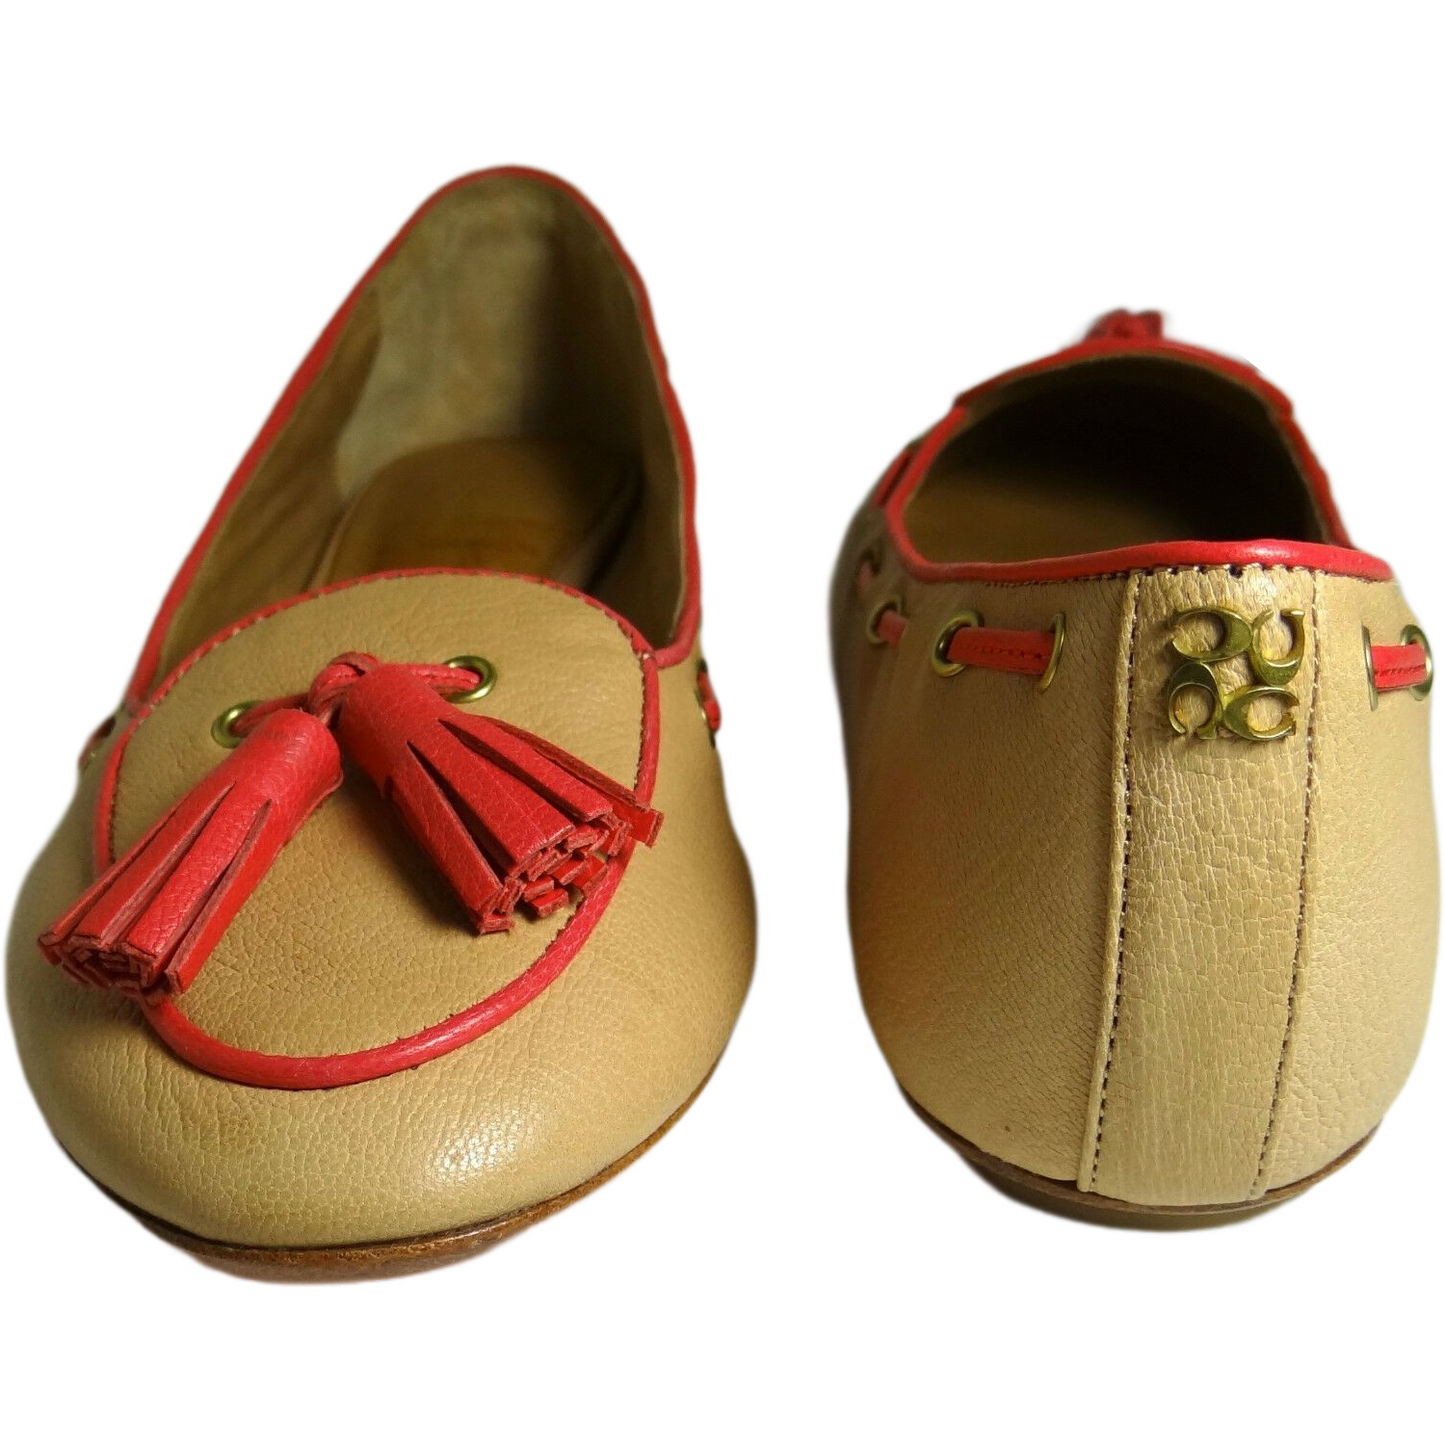 COACH Manika Soft Tan Leather Flat Shoes manika-soft-tan-leather-flat-shoes 29095784528165-70374a92-49b.png